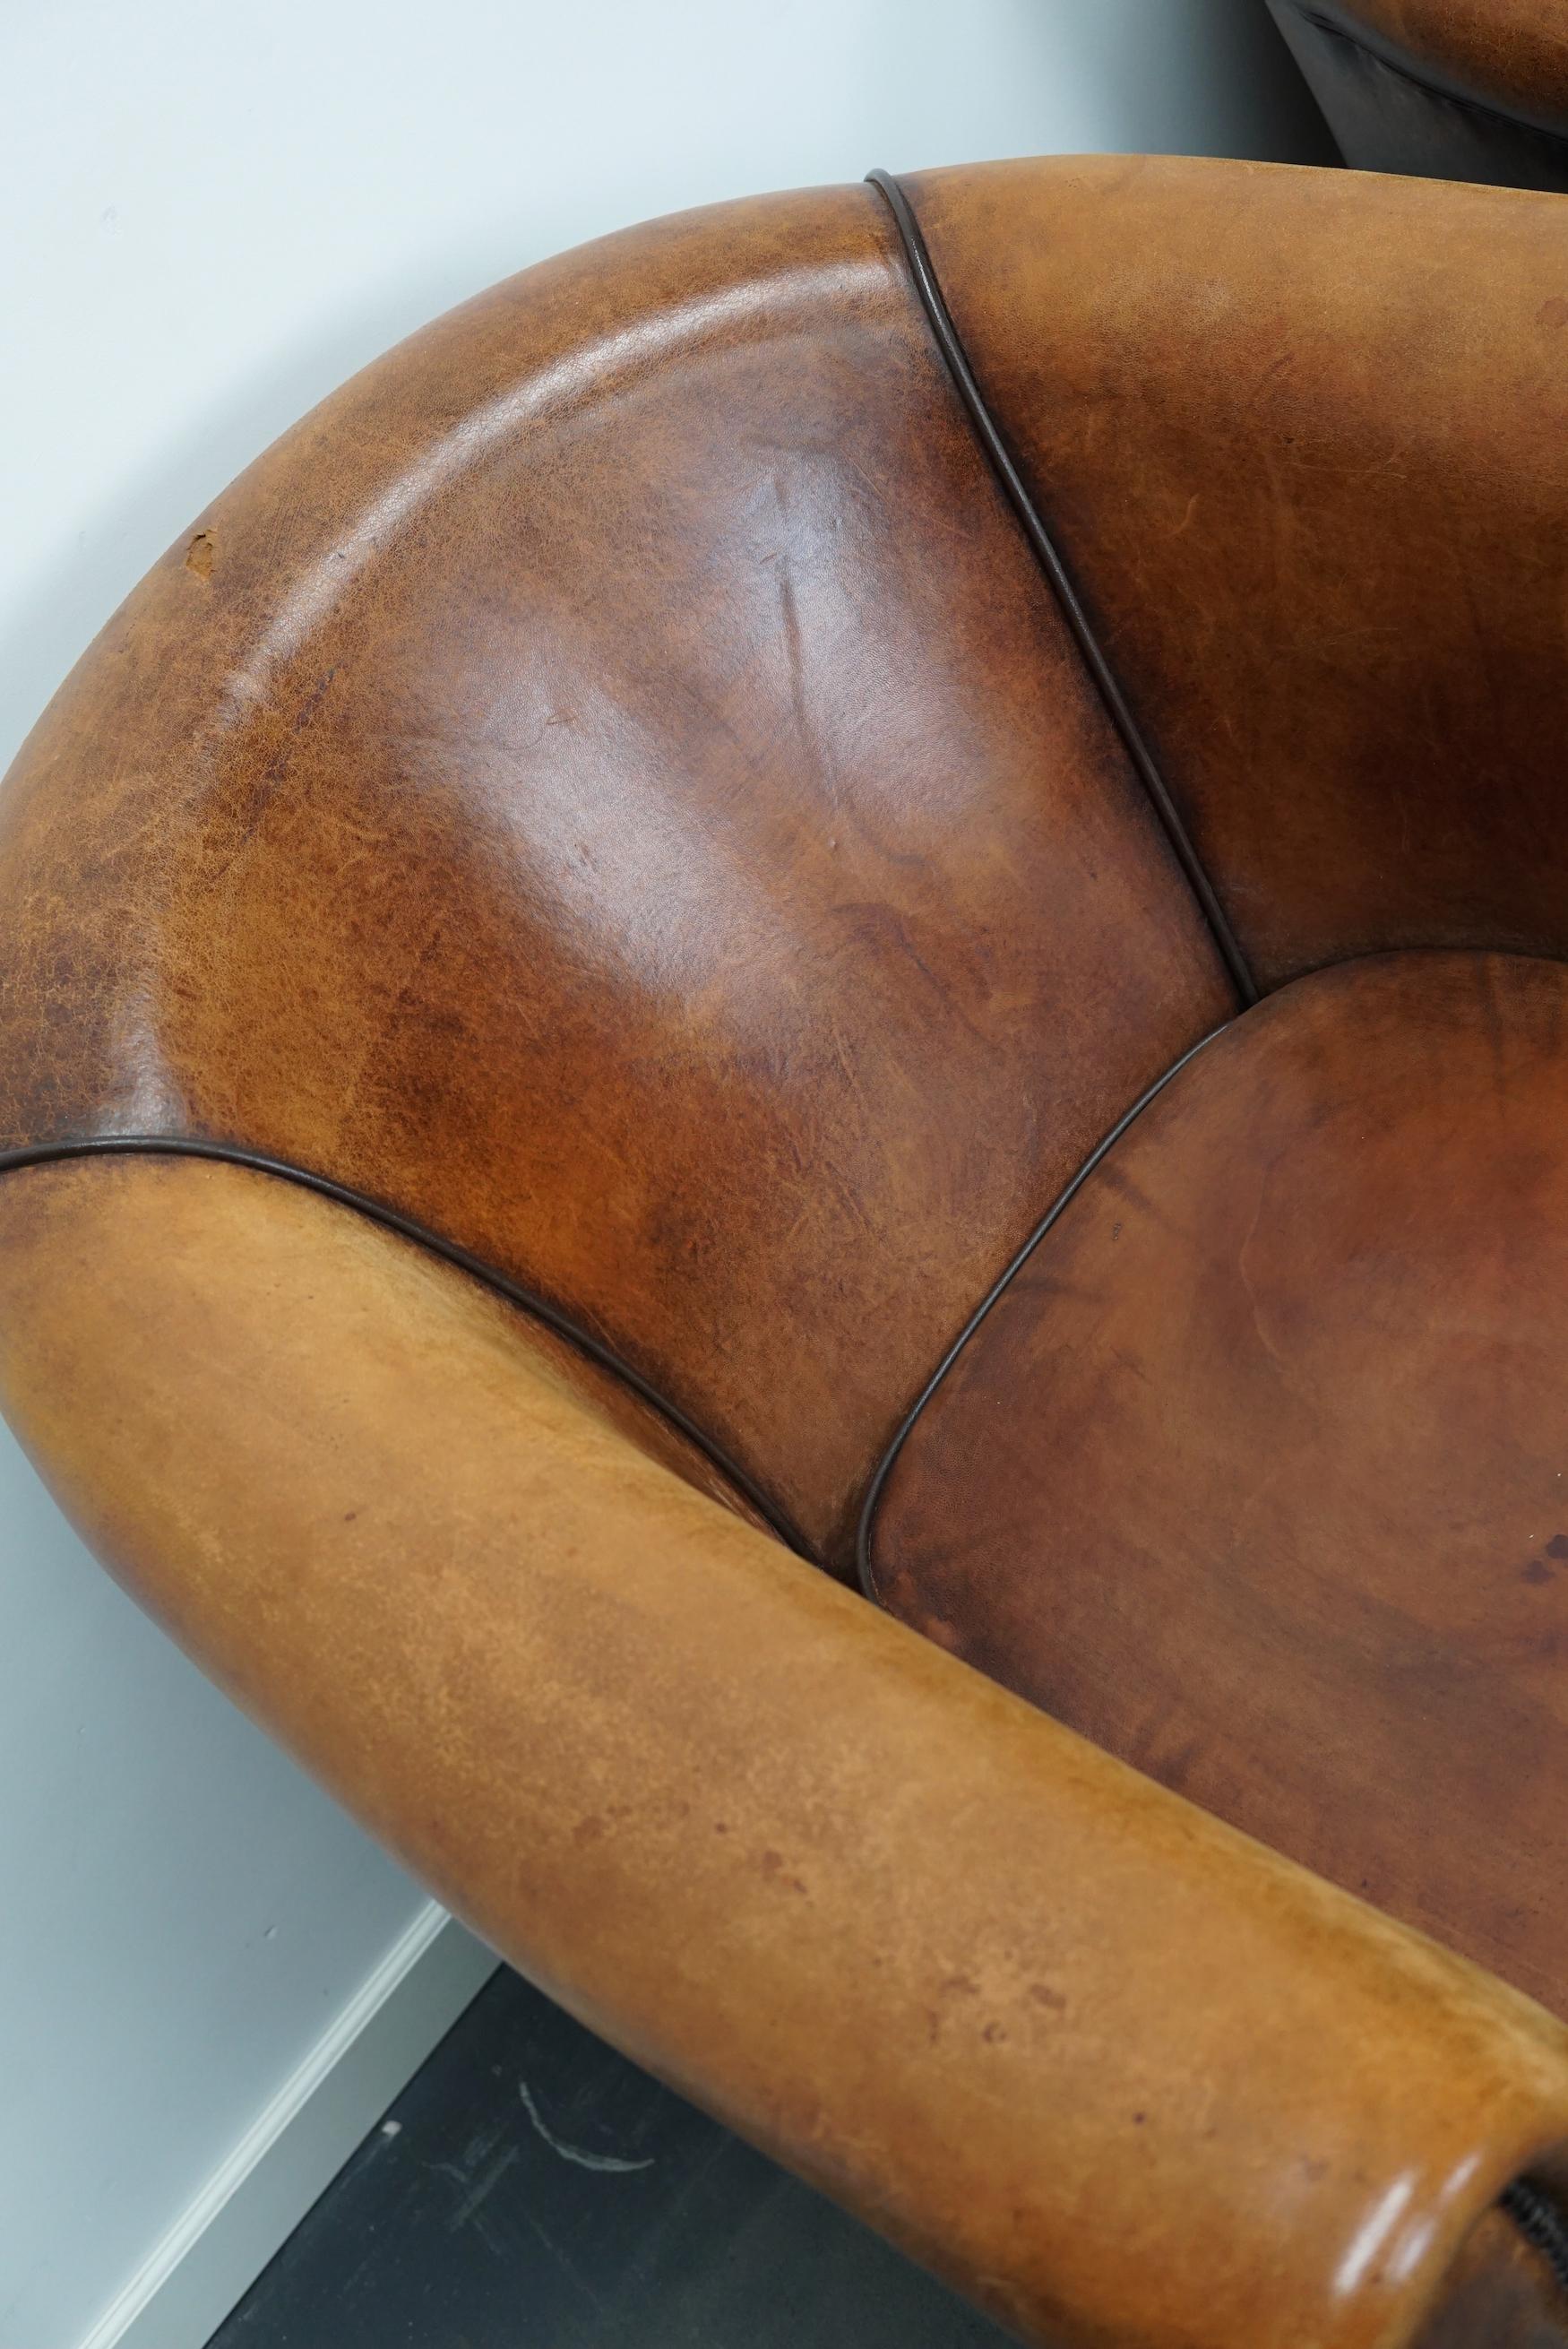 Vintage Dutch Cognac Leather Club Chairs, Set of 2 6